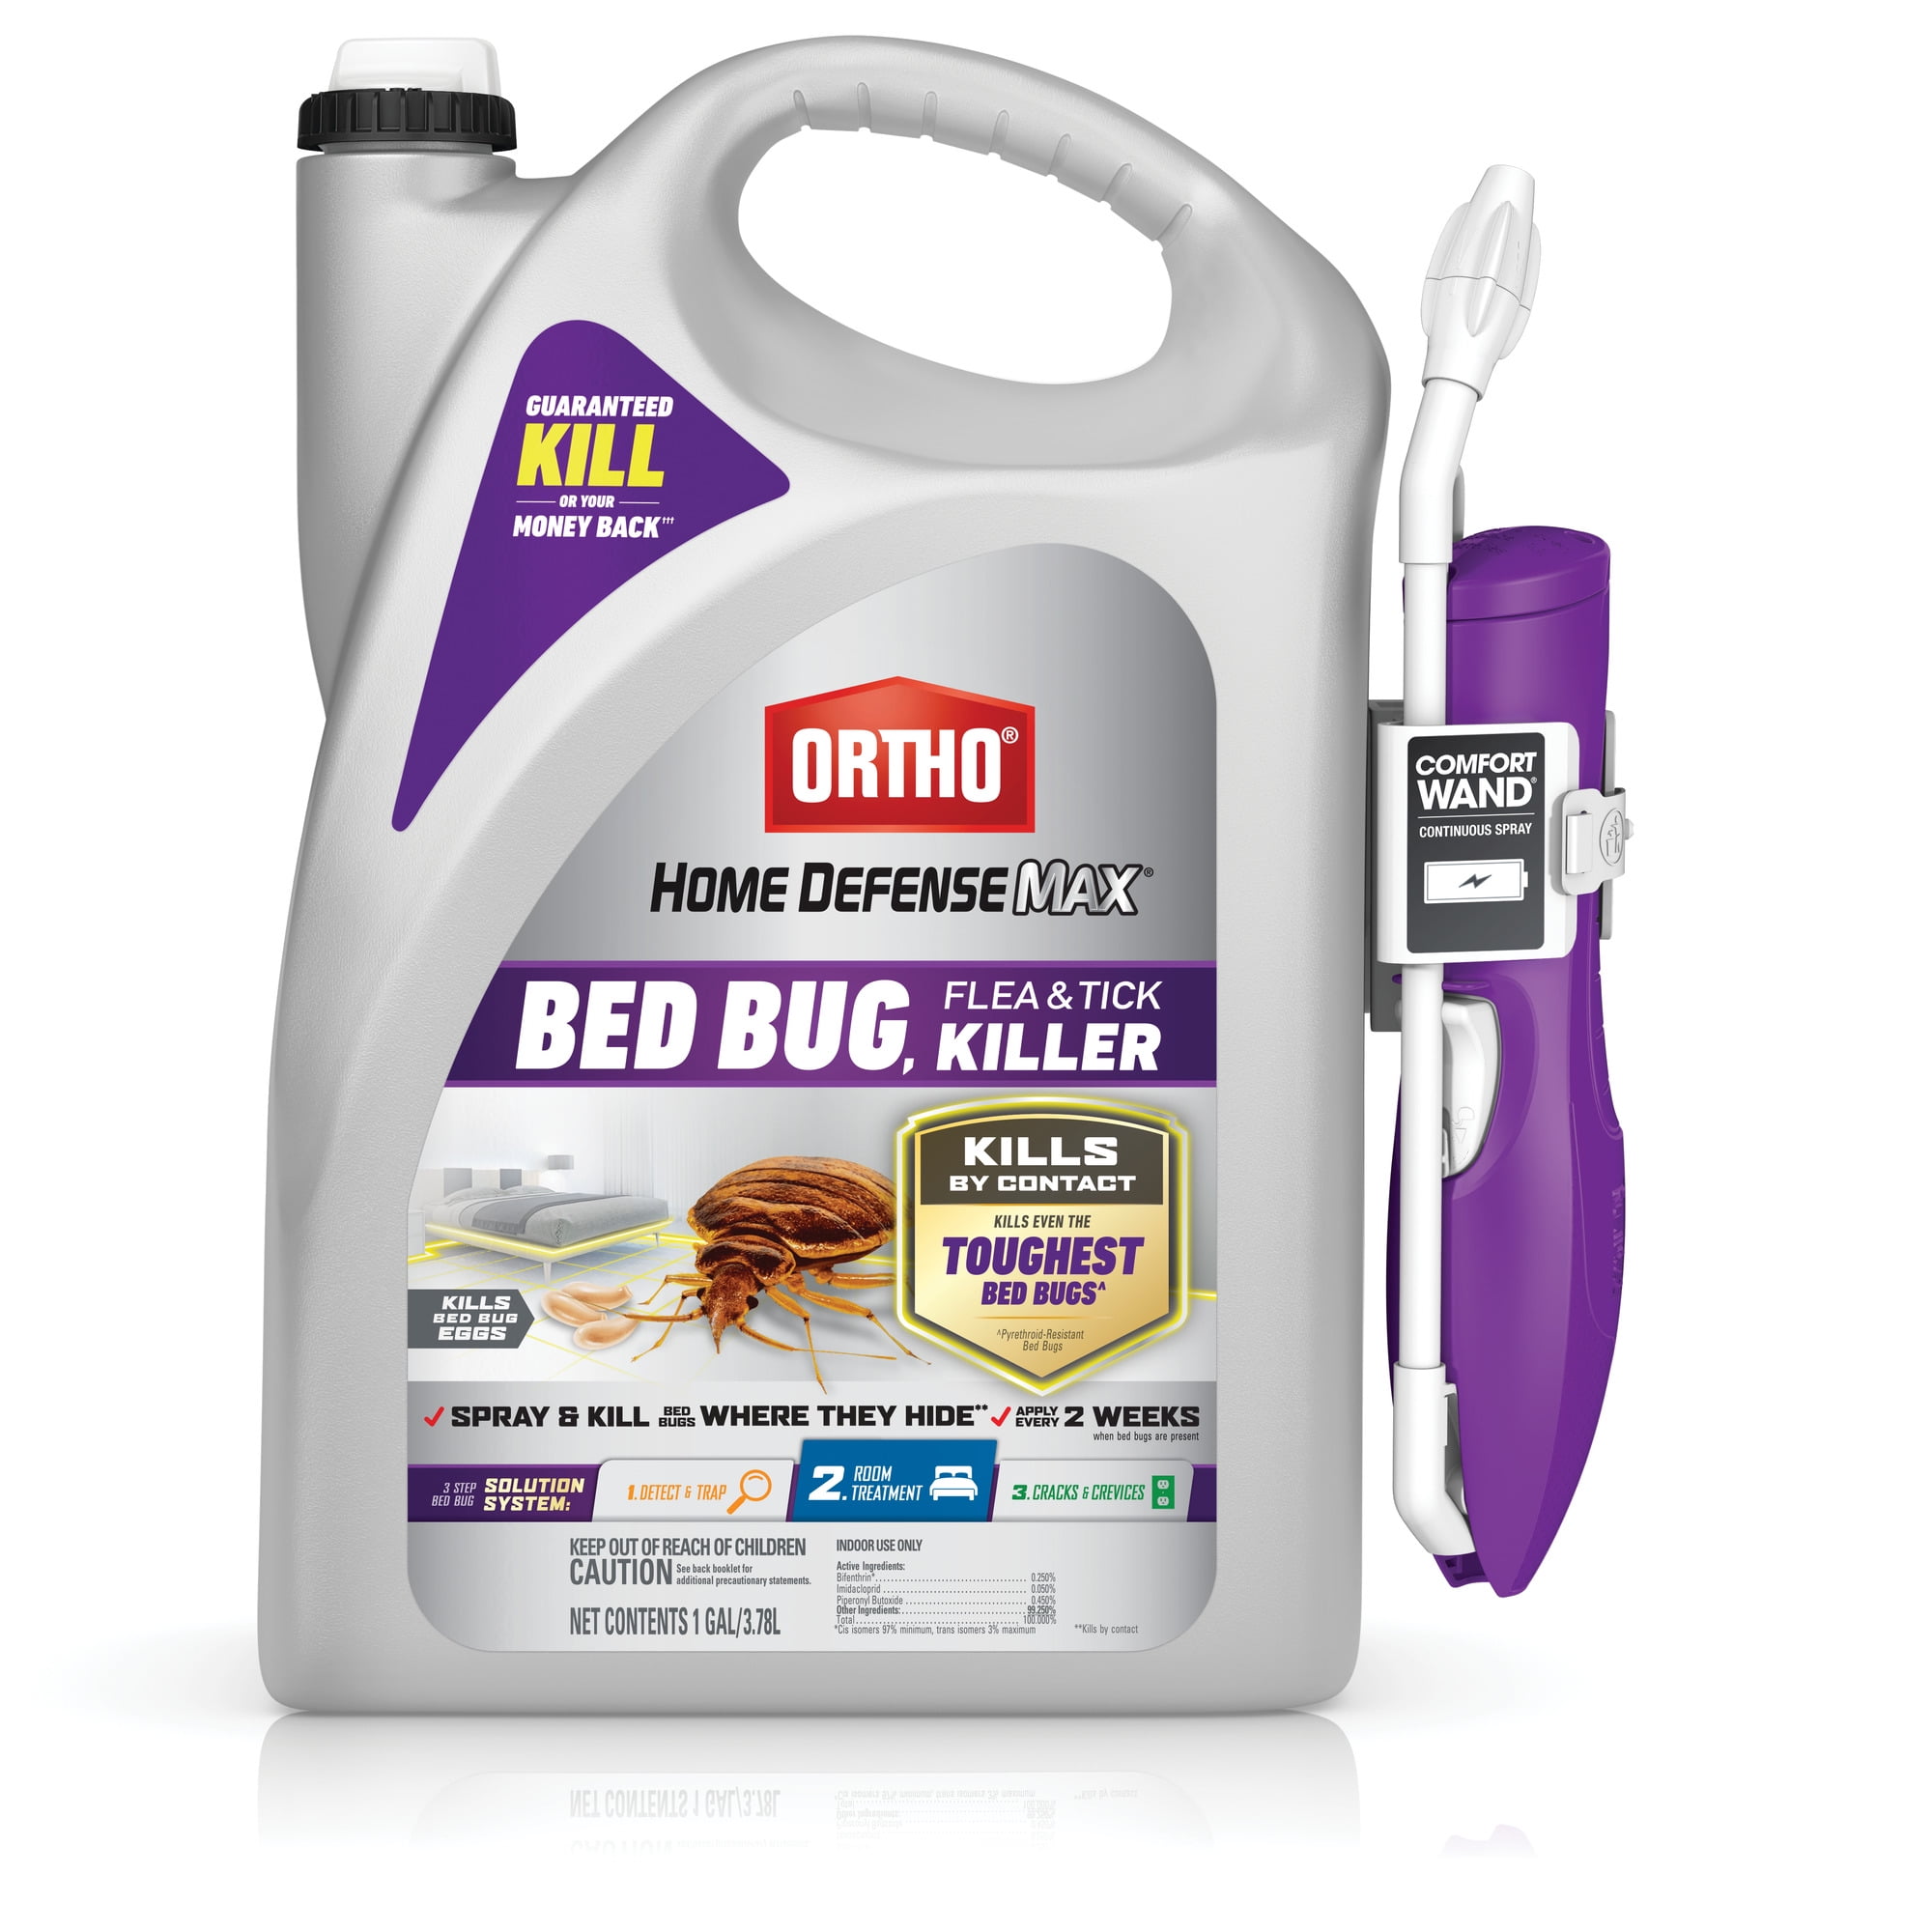 Ortho Home Defense Max Bed Bug, Flea & Tick Killer with Comfort Wand, 1 gal